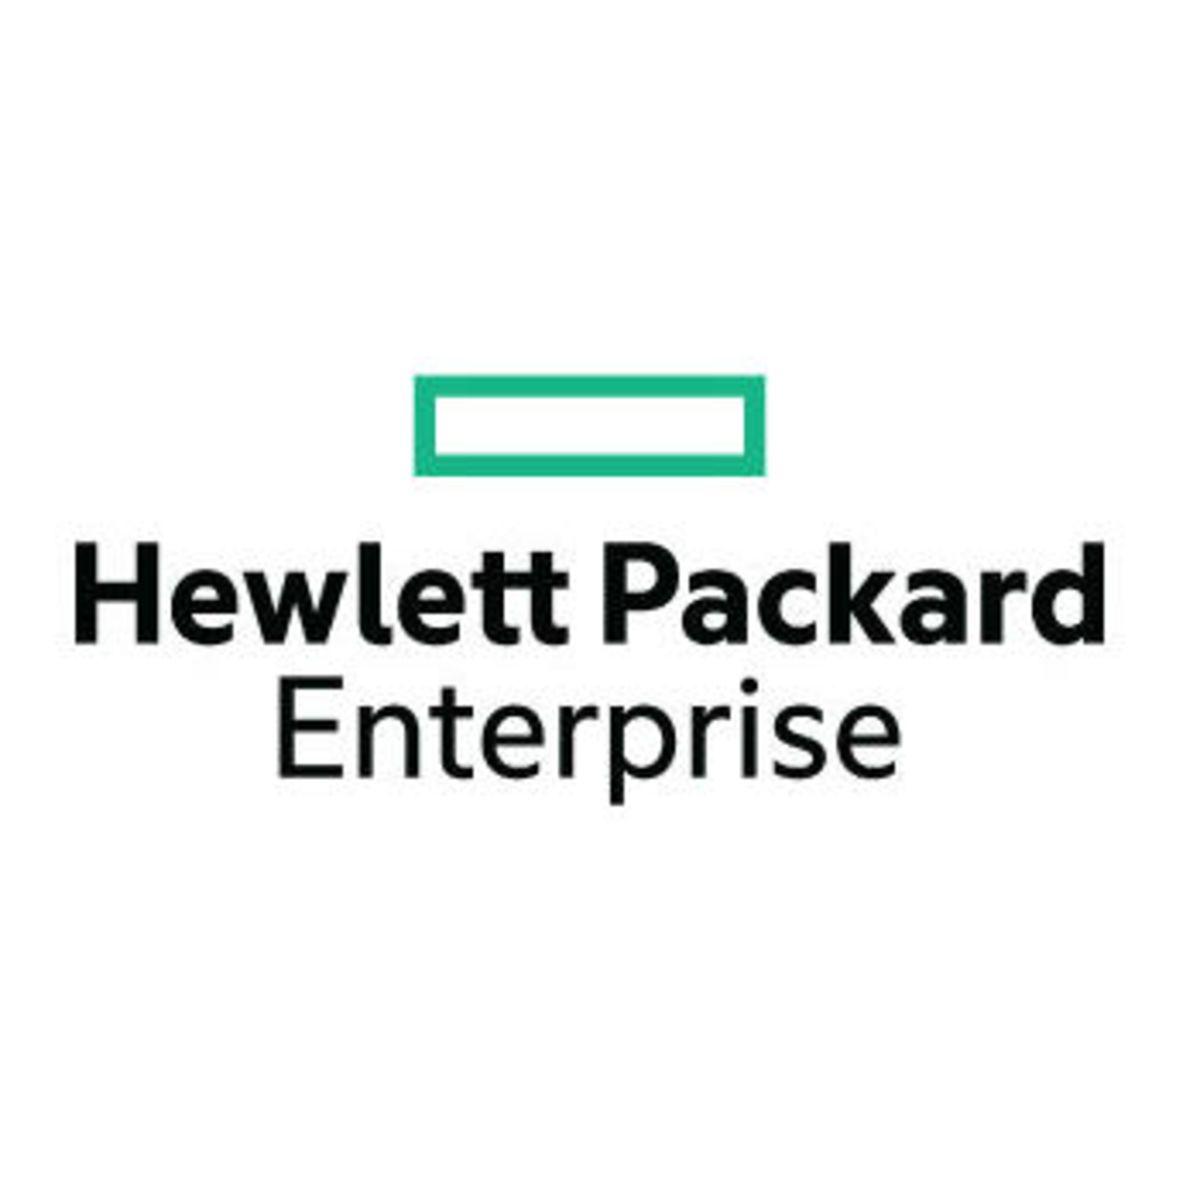 HP Enterprise Logo - Hewlett-Packard-Enterprise-Logo - The Cheers